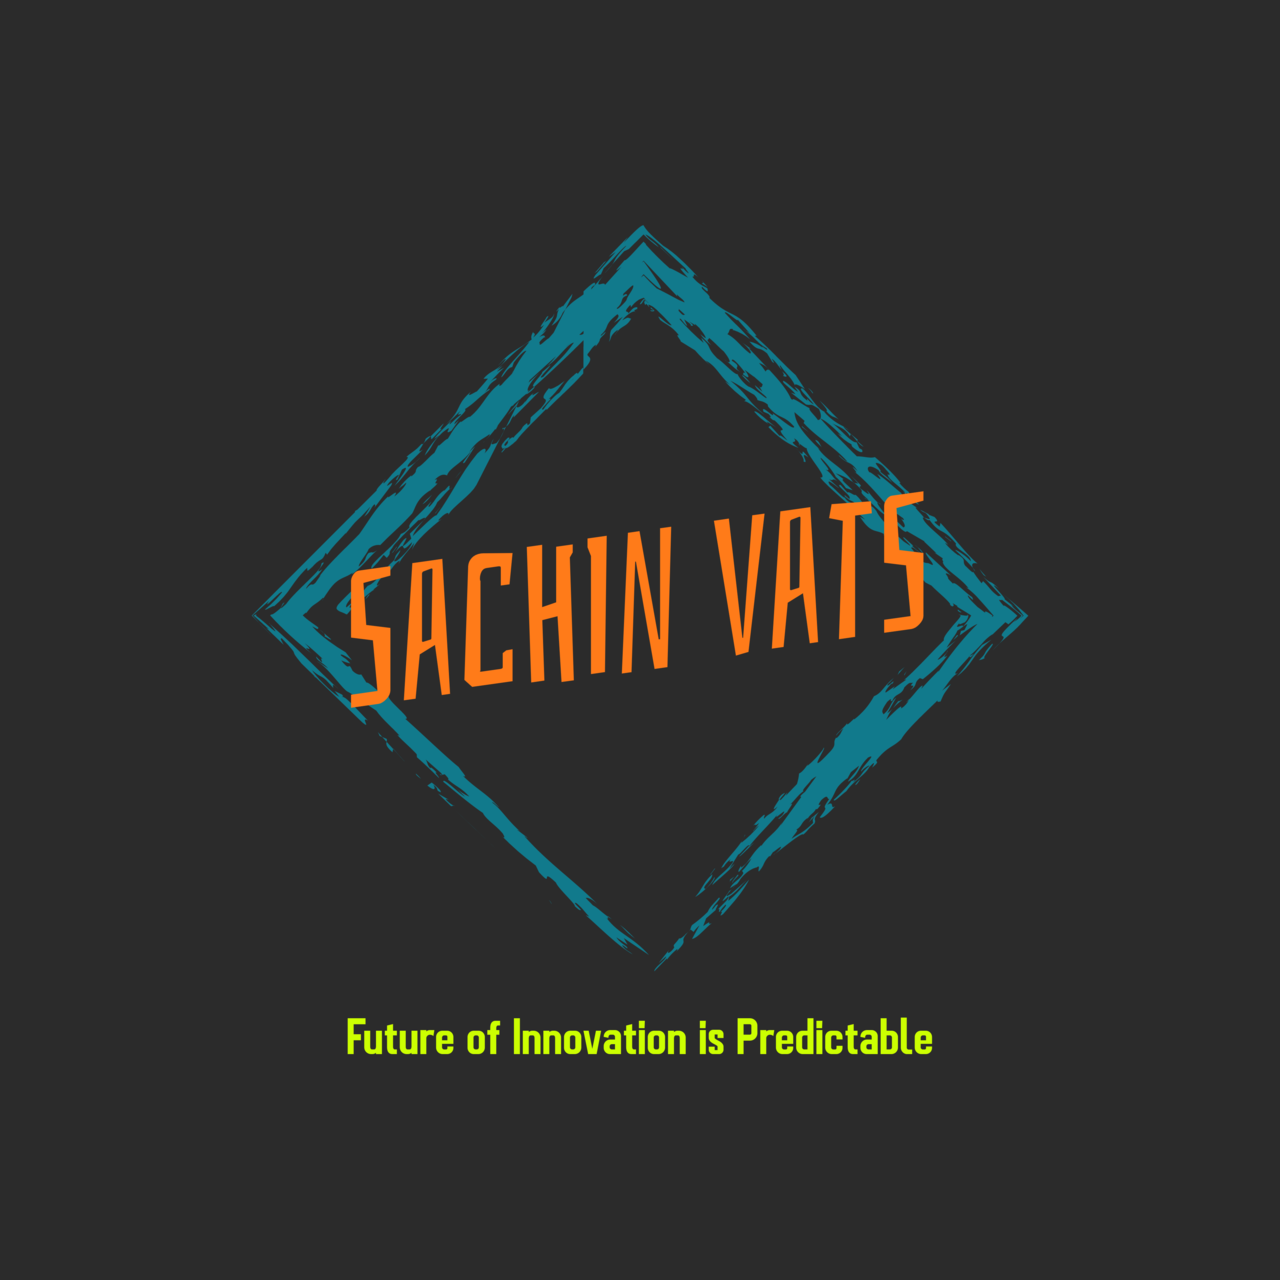 Sachin’s Newsletter on Digital and Energy